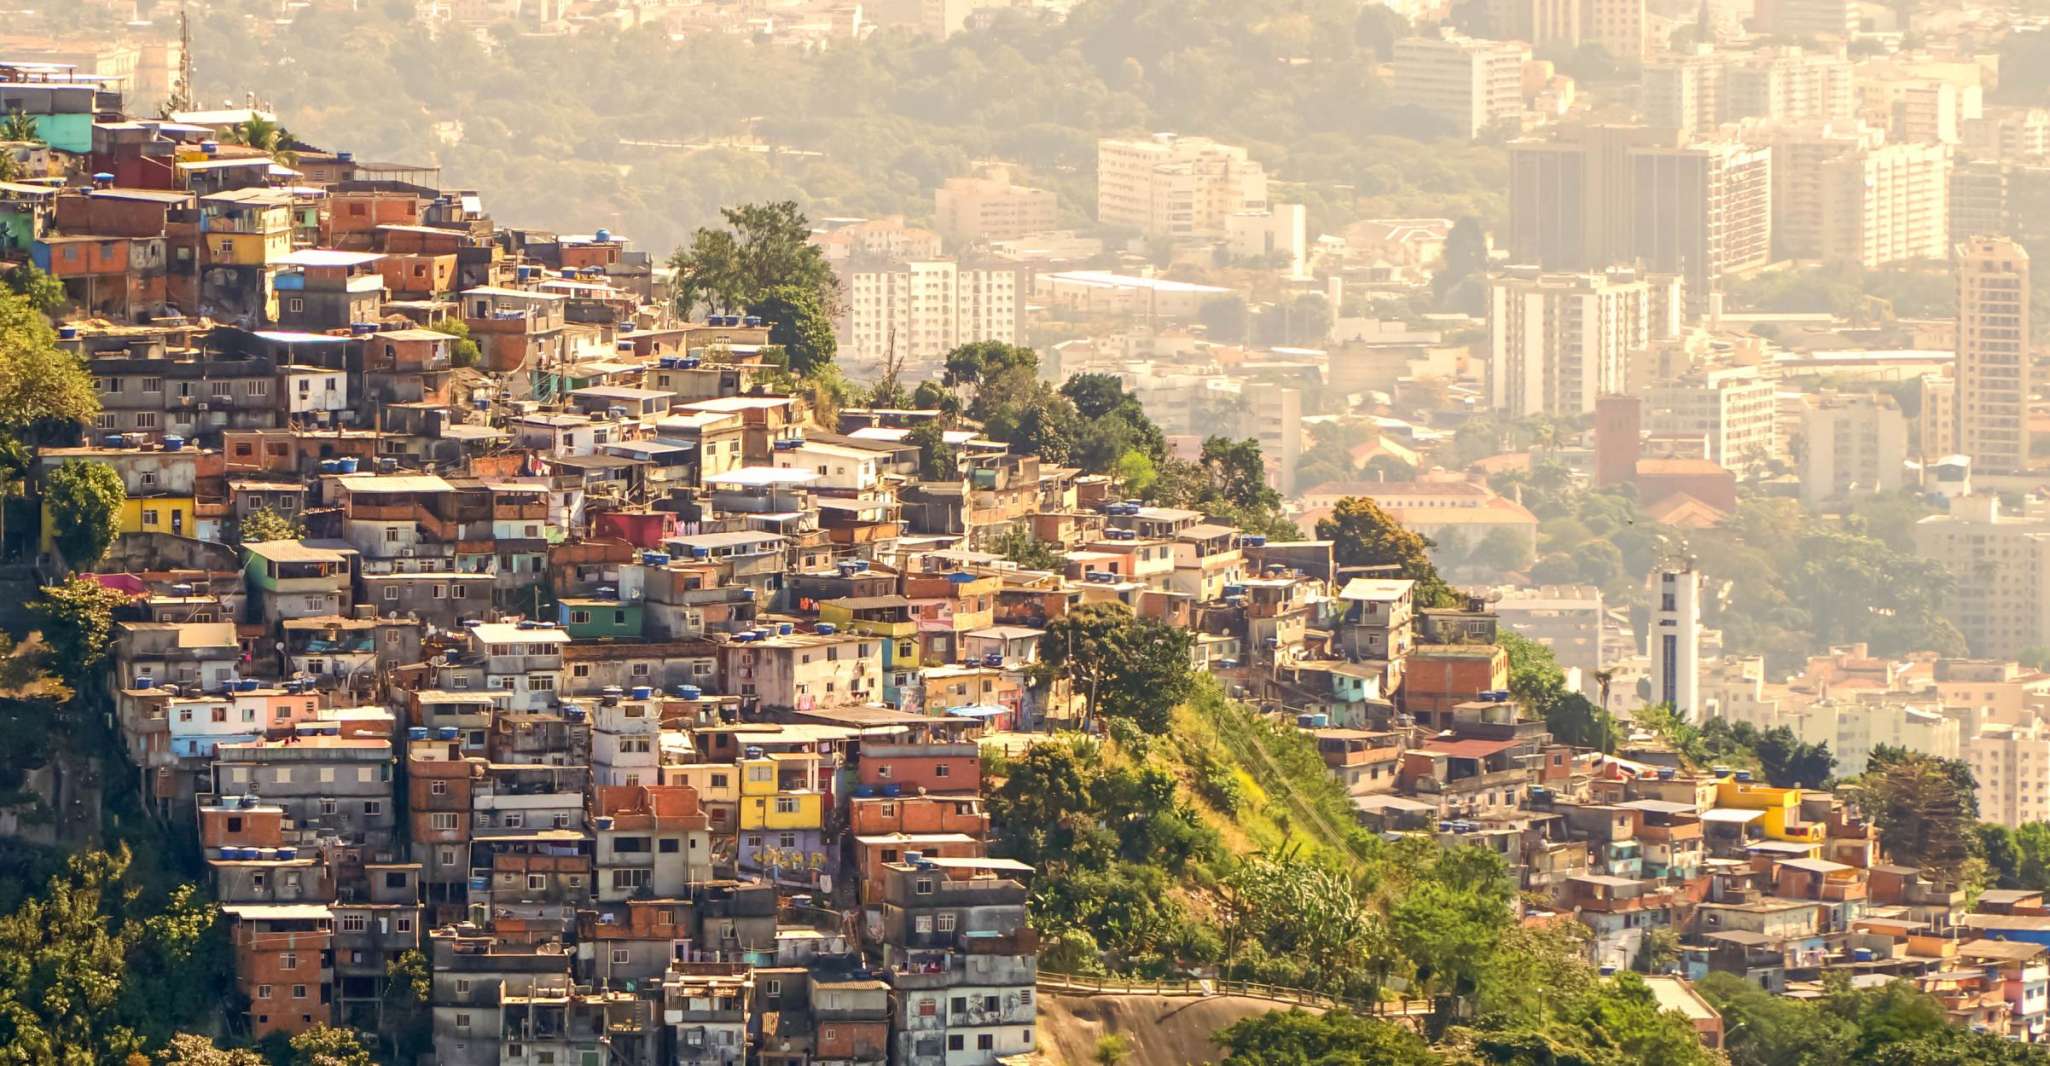 Rio de Janeiro, Rocinha Favela Walking Tour with Local Guide - Housity